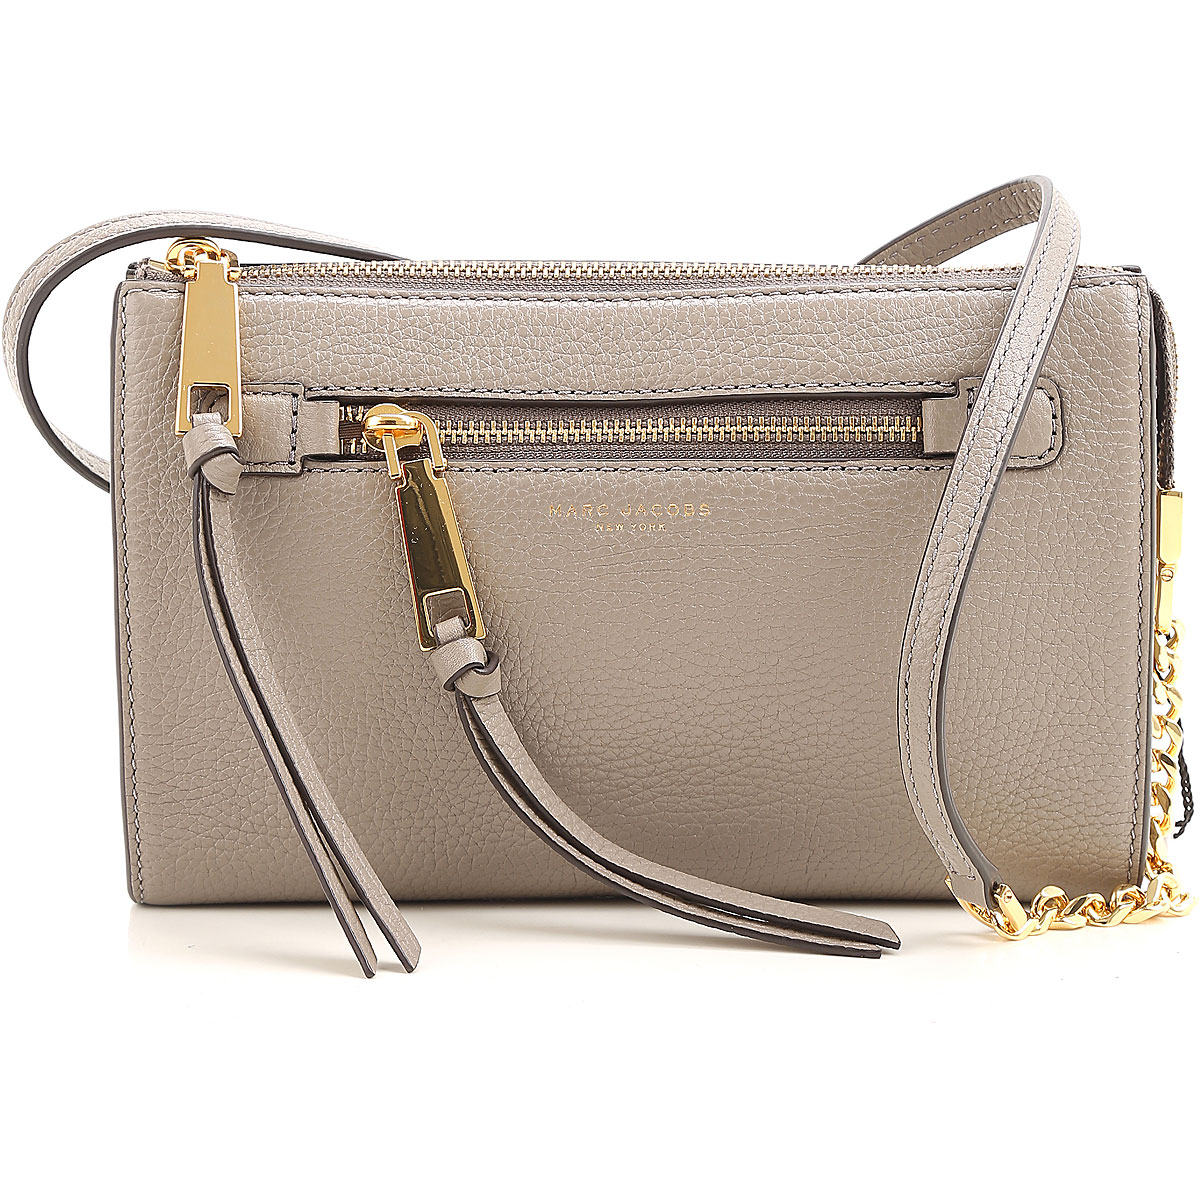 Handbags Marc Jacobs, Style code: m0012573-213-